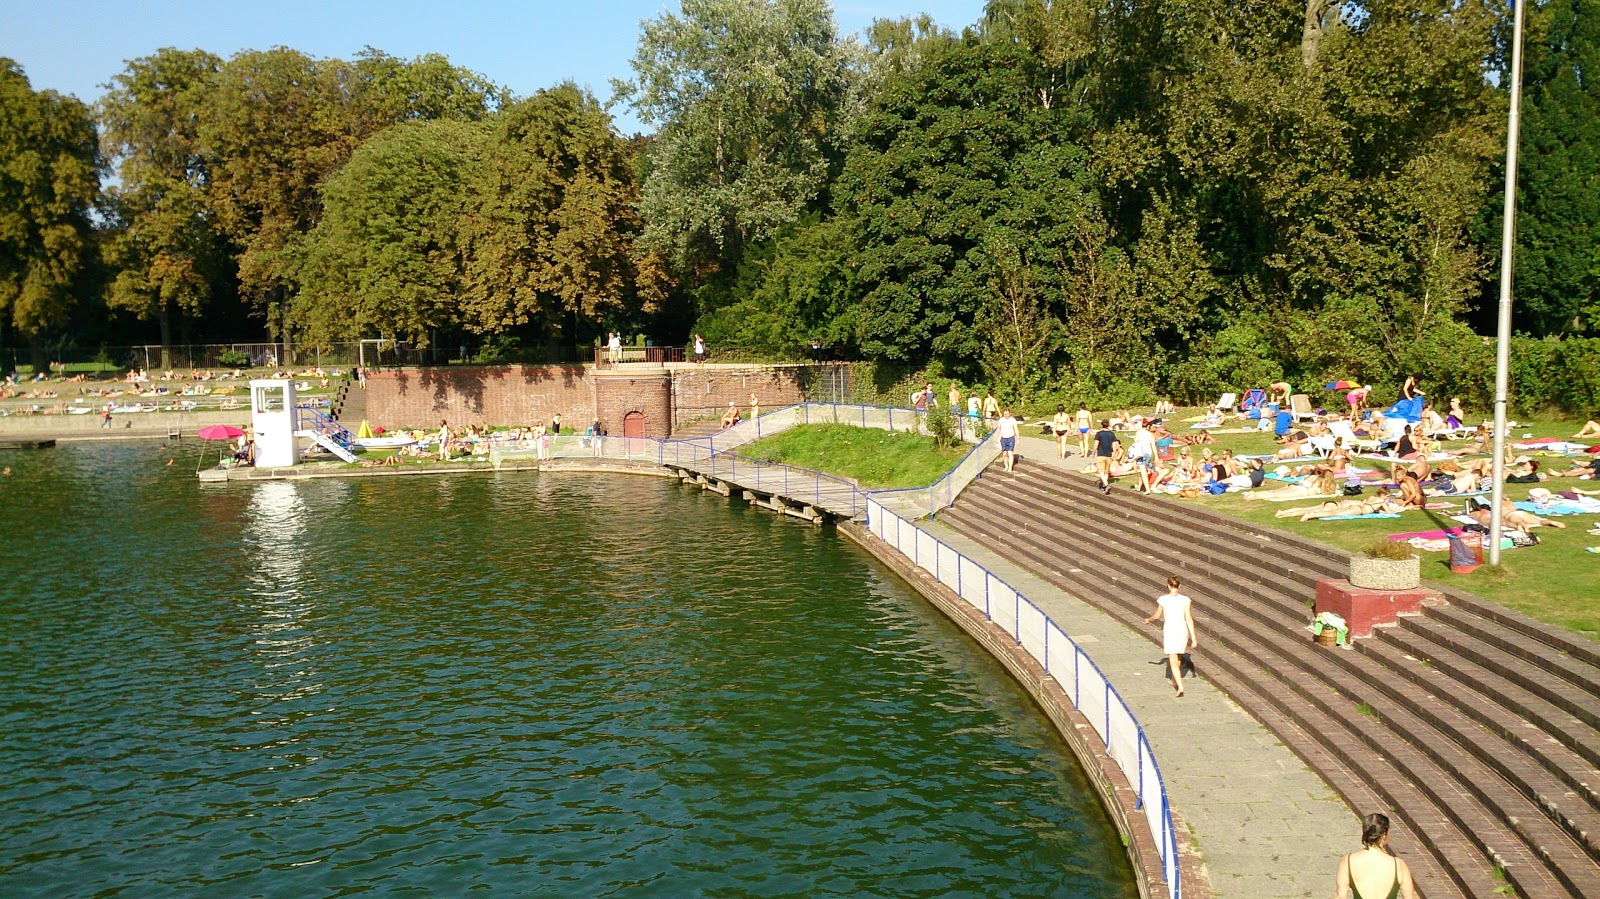 Naturbad Stadtparksee的照片 带有混凝土覆盖表面